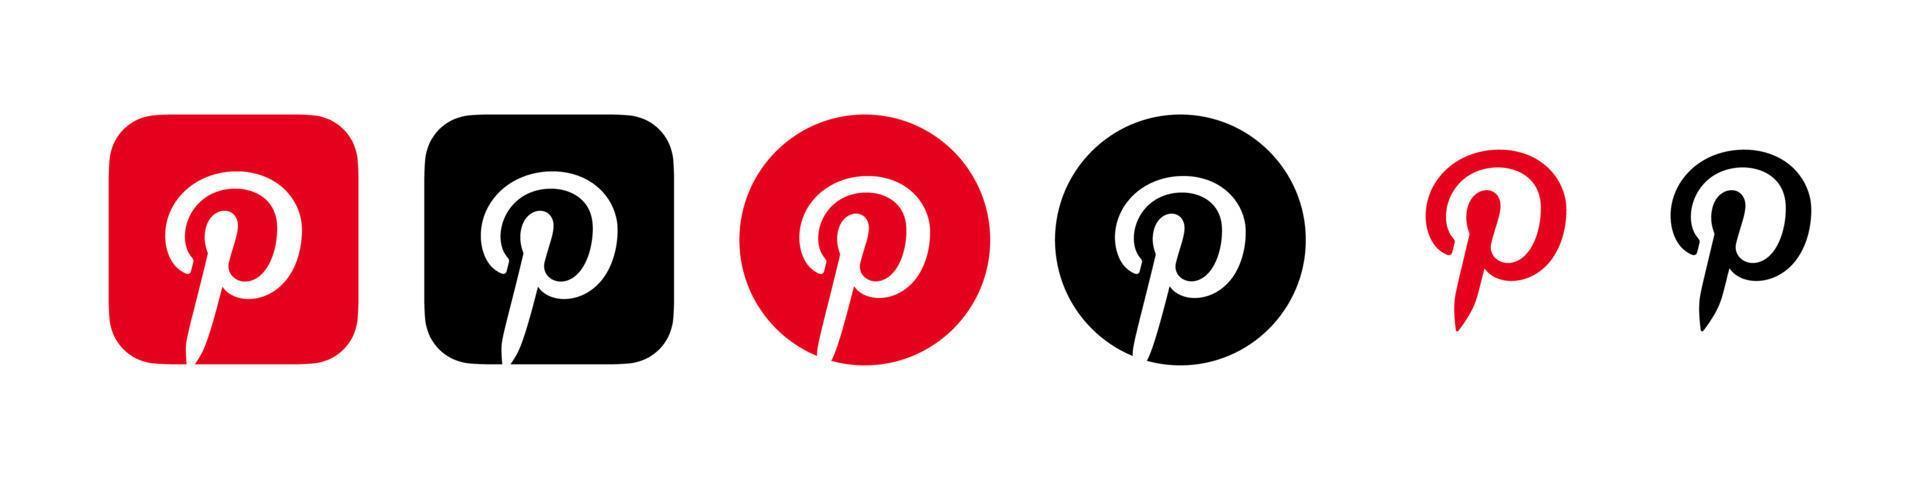 Pinterest logo vector, Pinterest symbol, Pinterest icon Free vector